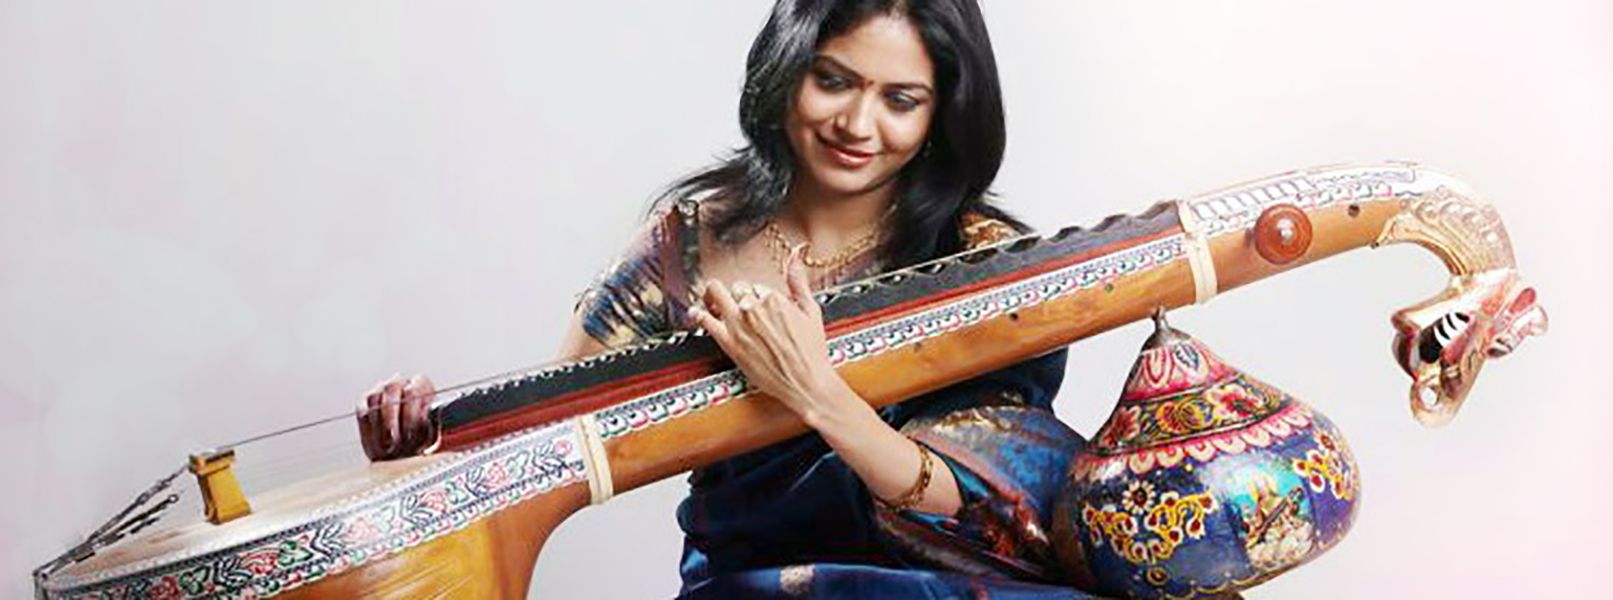 Sunitha Upadrashta playing Veena